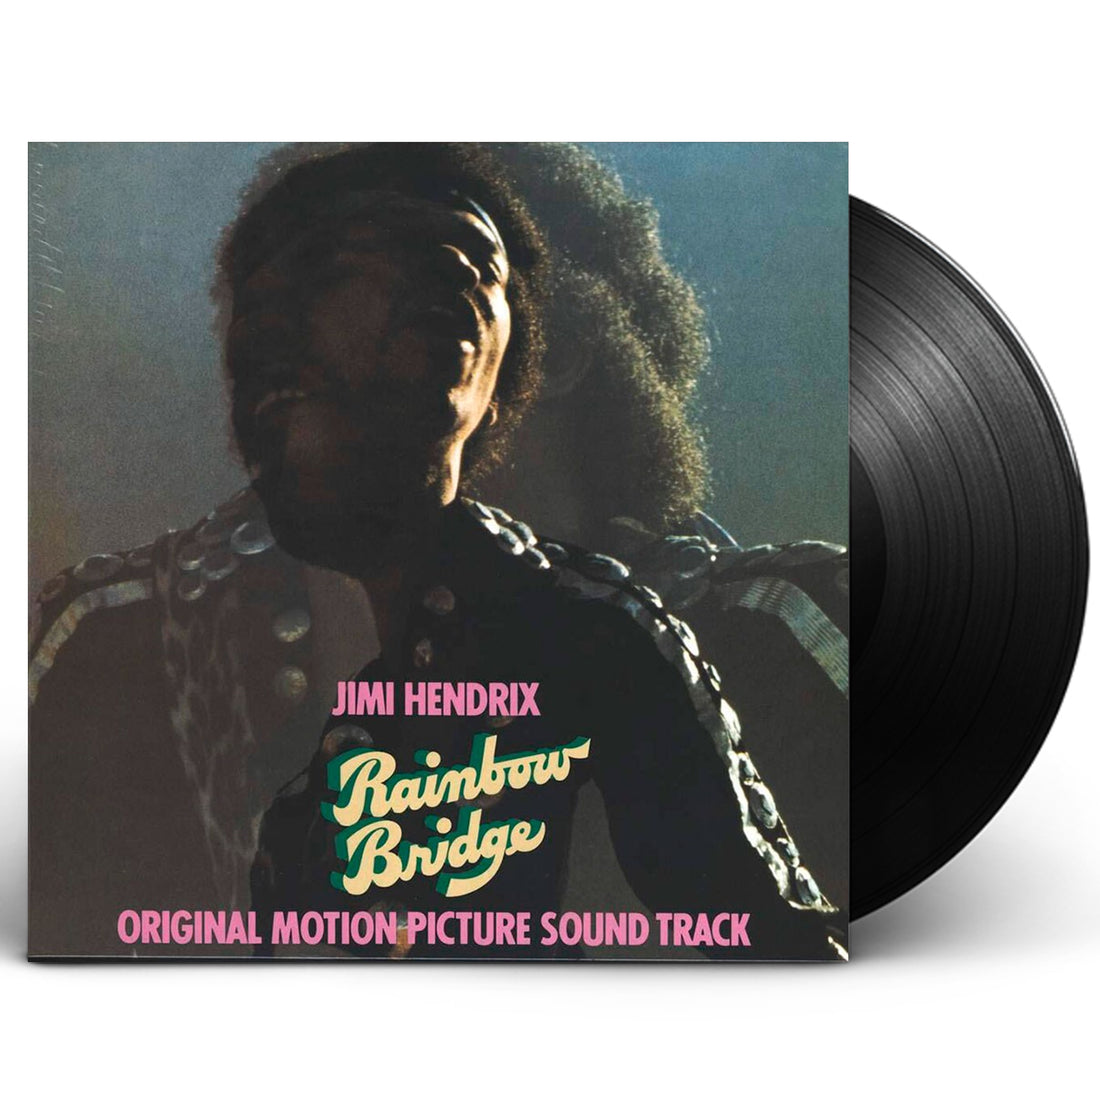 Jimi Hendrix "Rainbow Bridge" LP Vinyl